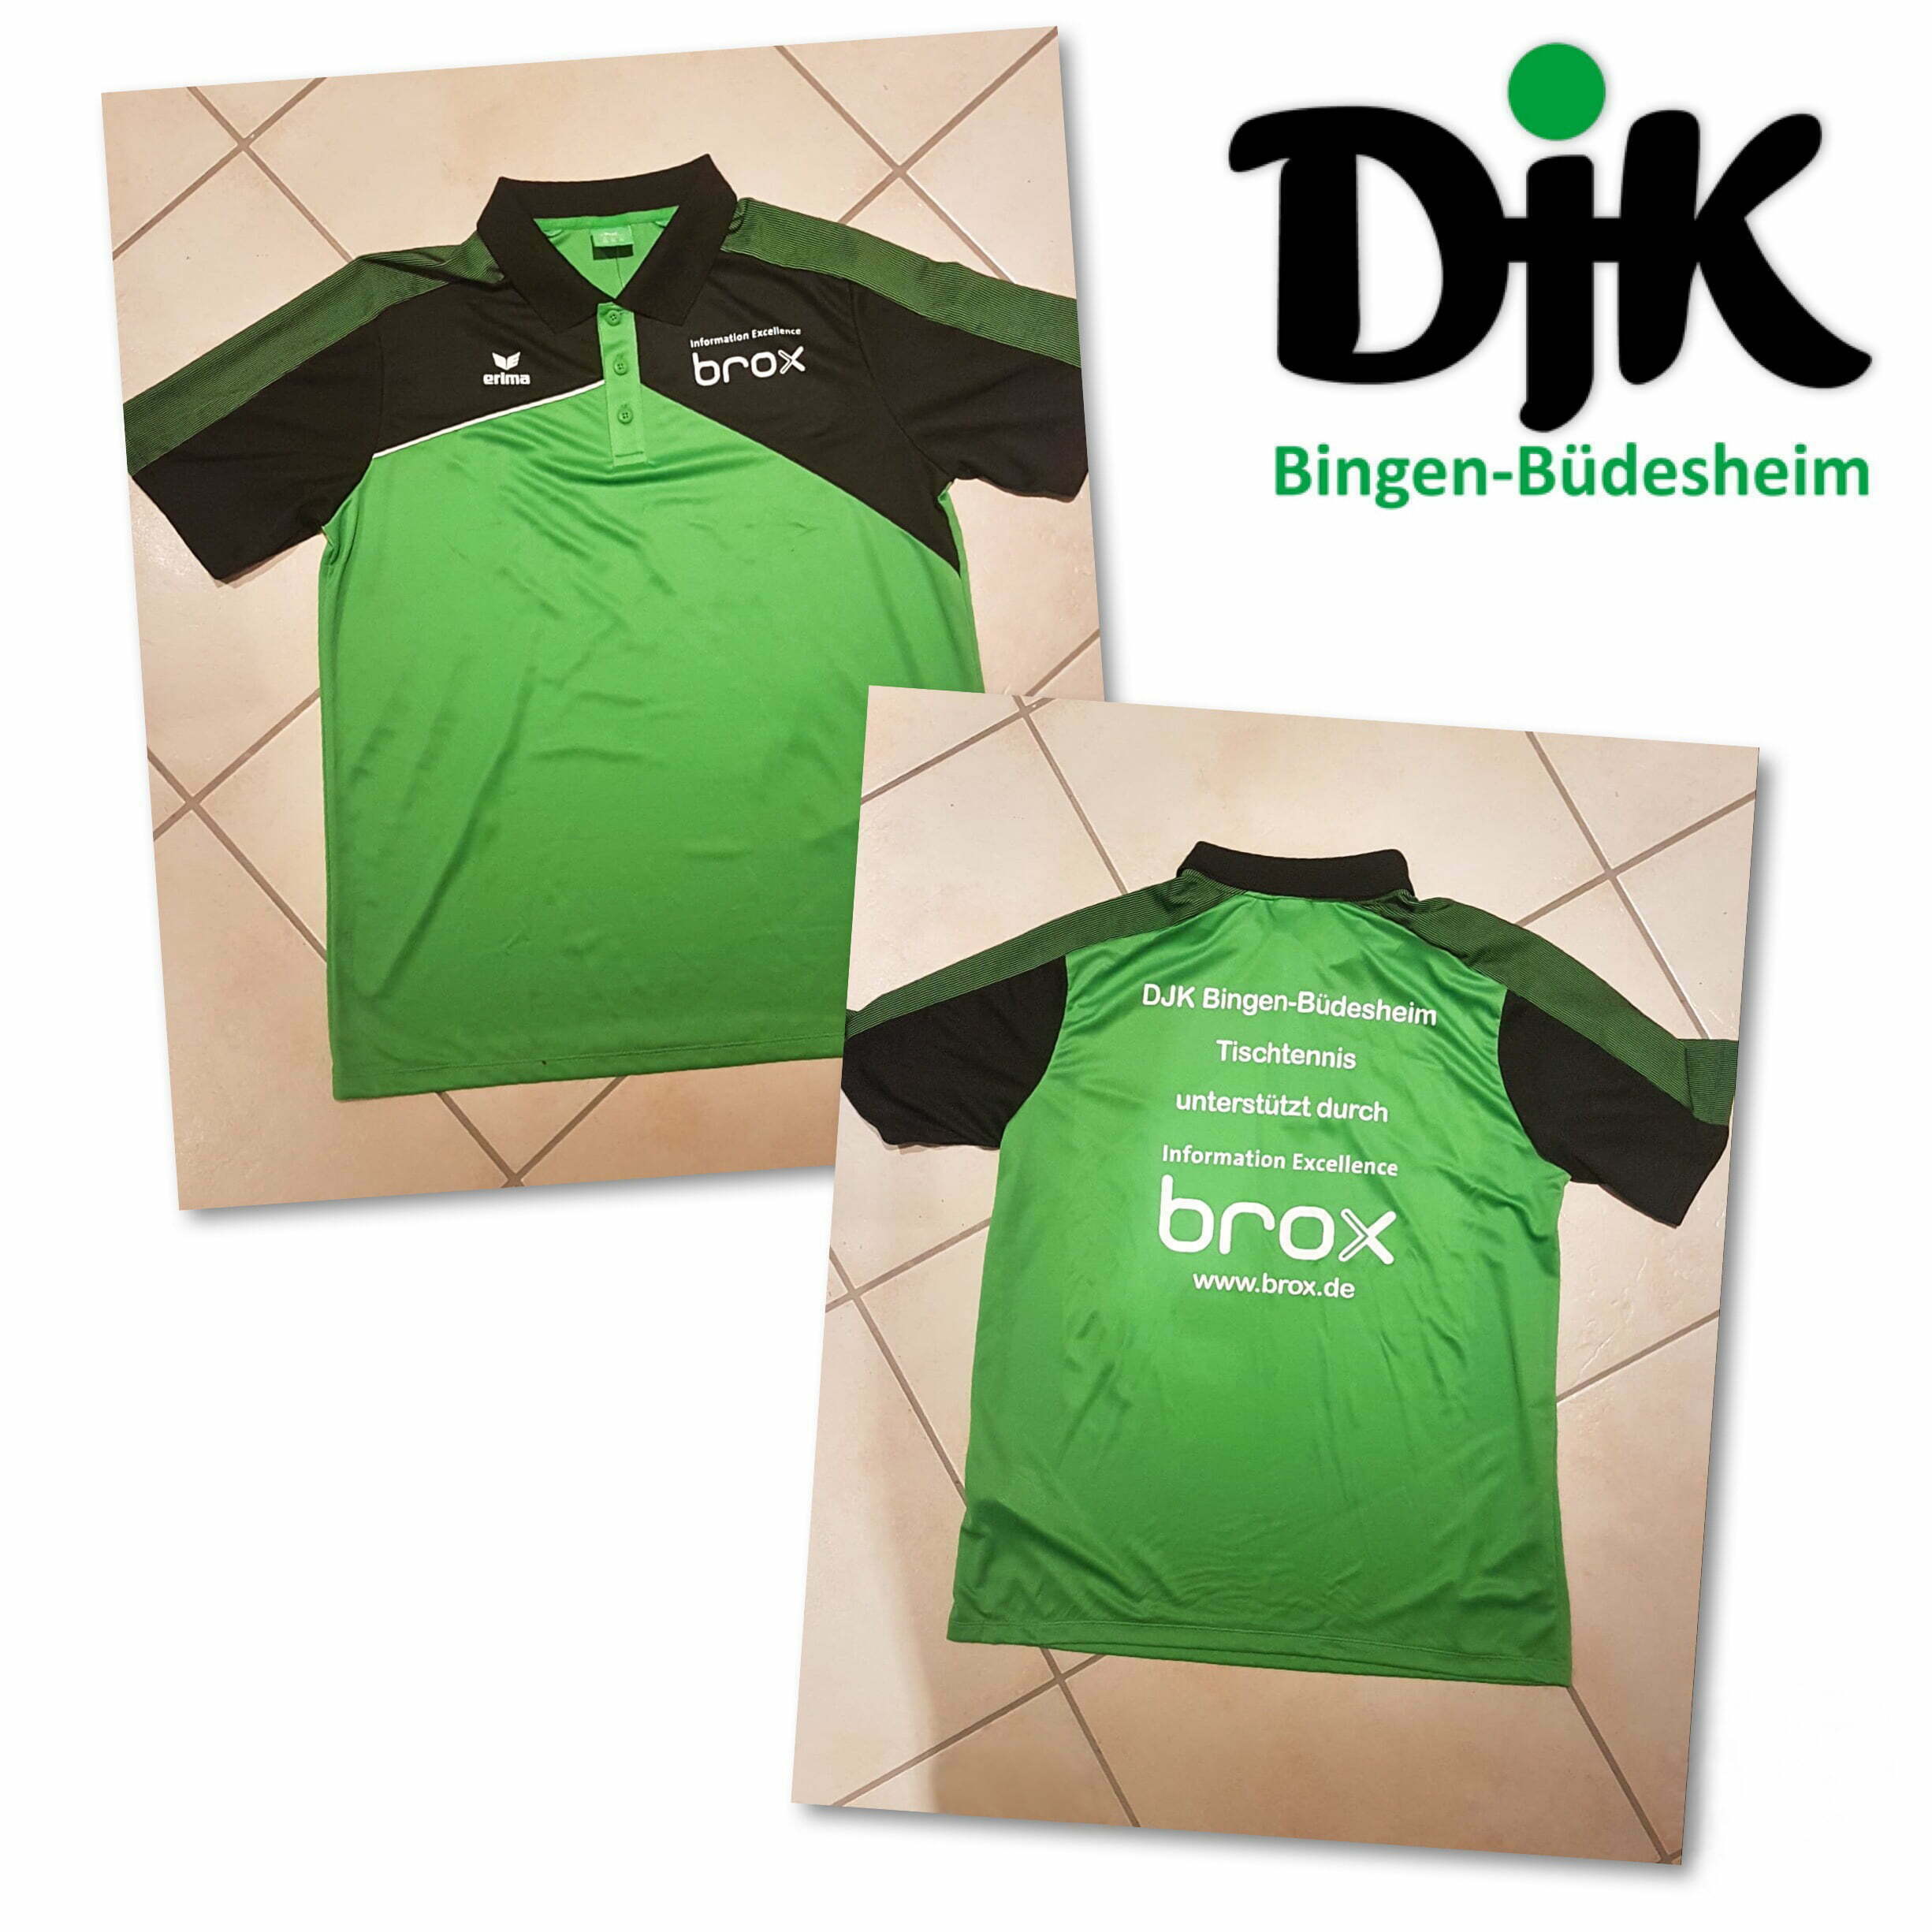 Brox IT-Solutions GmbH, Tischtennis, Sponsoring, DJK Bingen-Büdesheim, Aktivitäten, Sport, Trikot